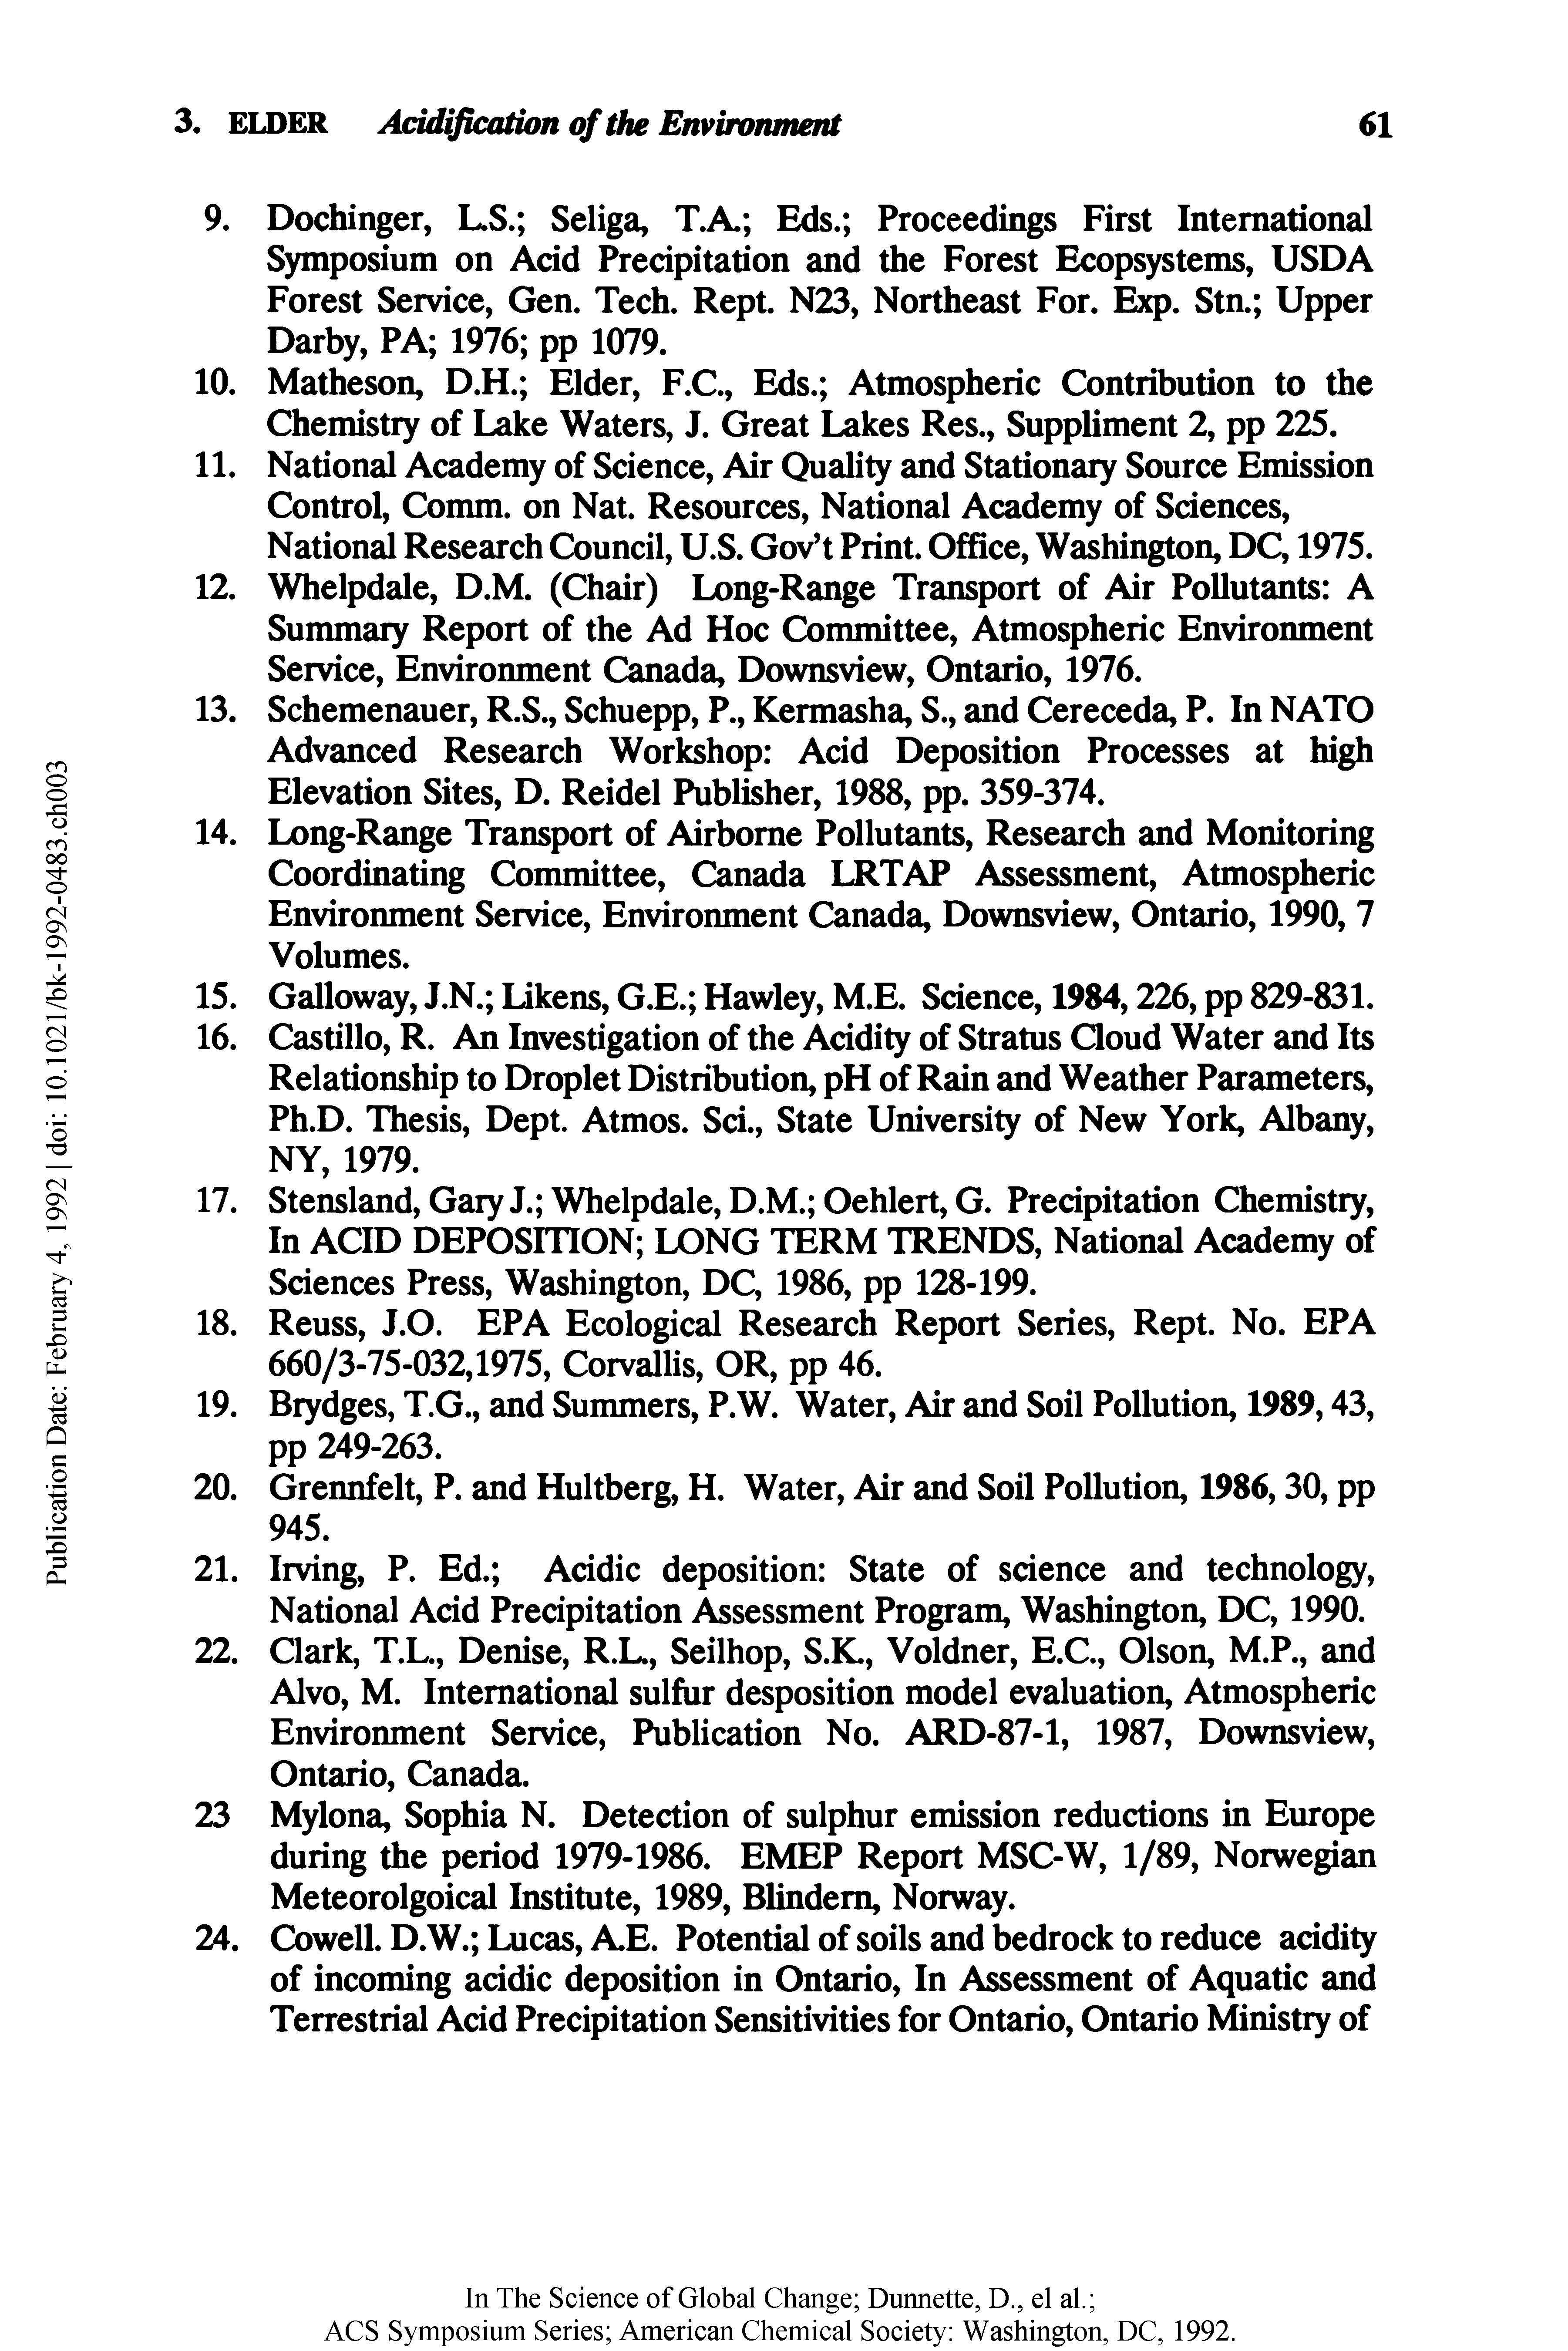 Schemenauer, R.S., Schuepp, P., Kermasha, S., and Cereceda, P. In NATO Advanced Research Workshop Acid Deposition Processes at high Elevation Sites, D. Reidel Publisher, 1988, pp. 359-374.